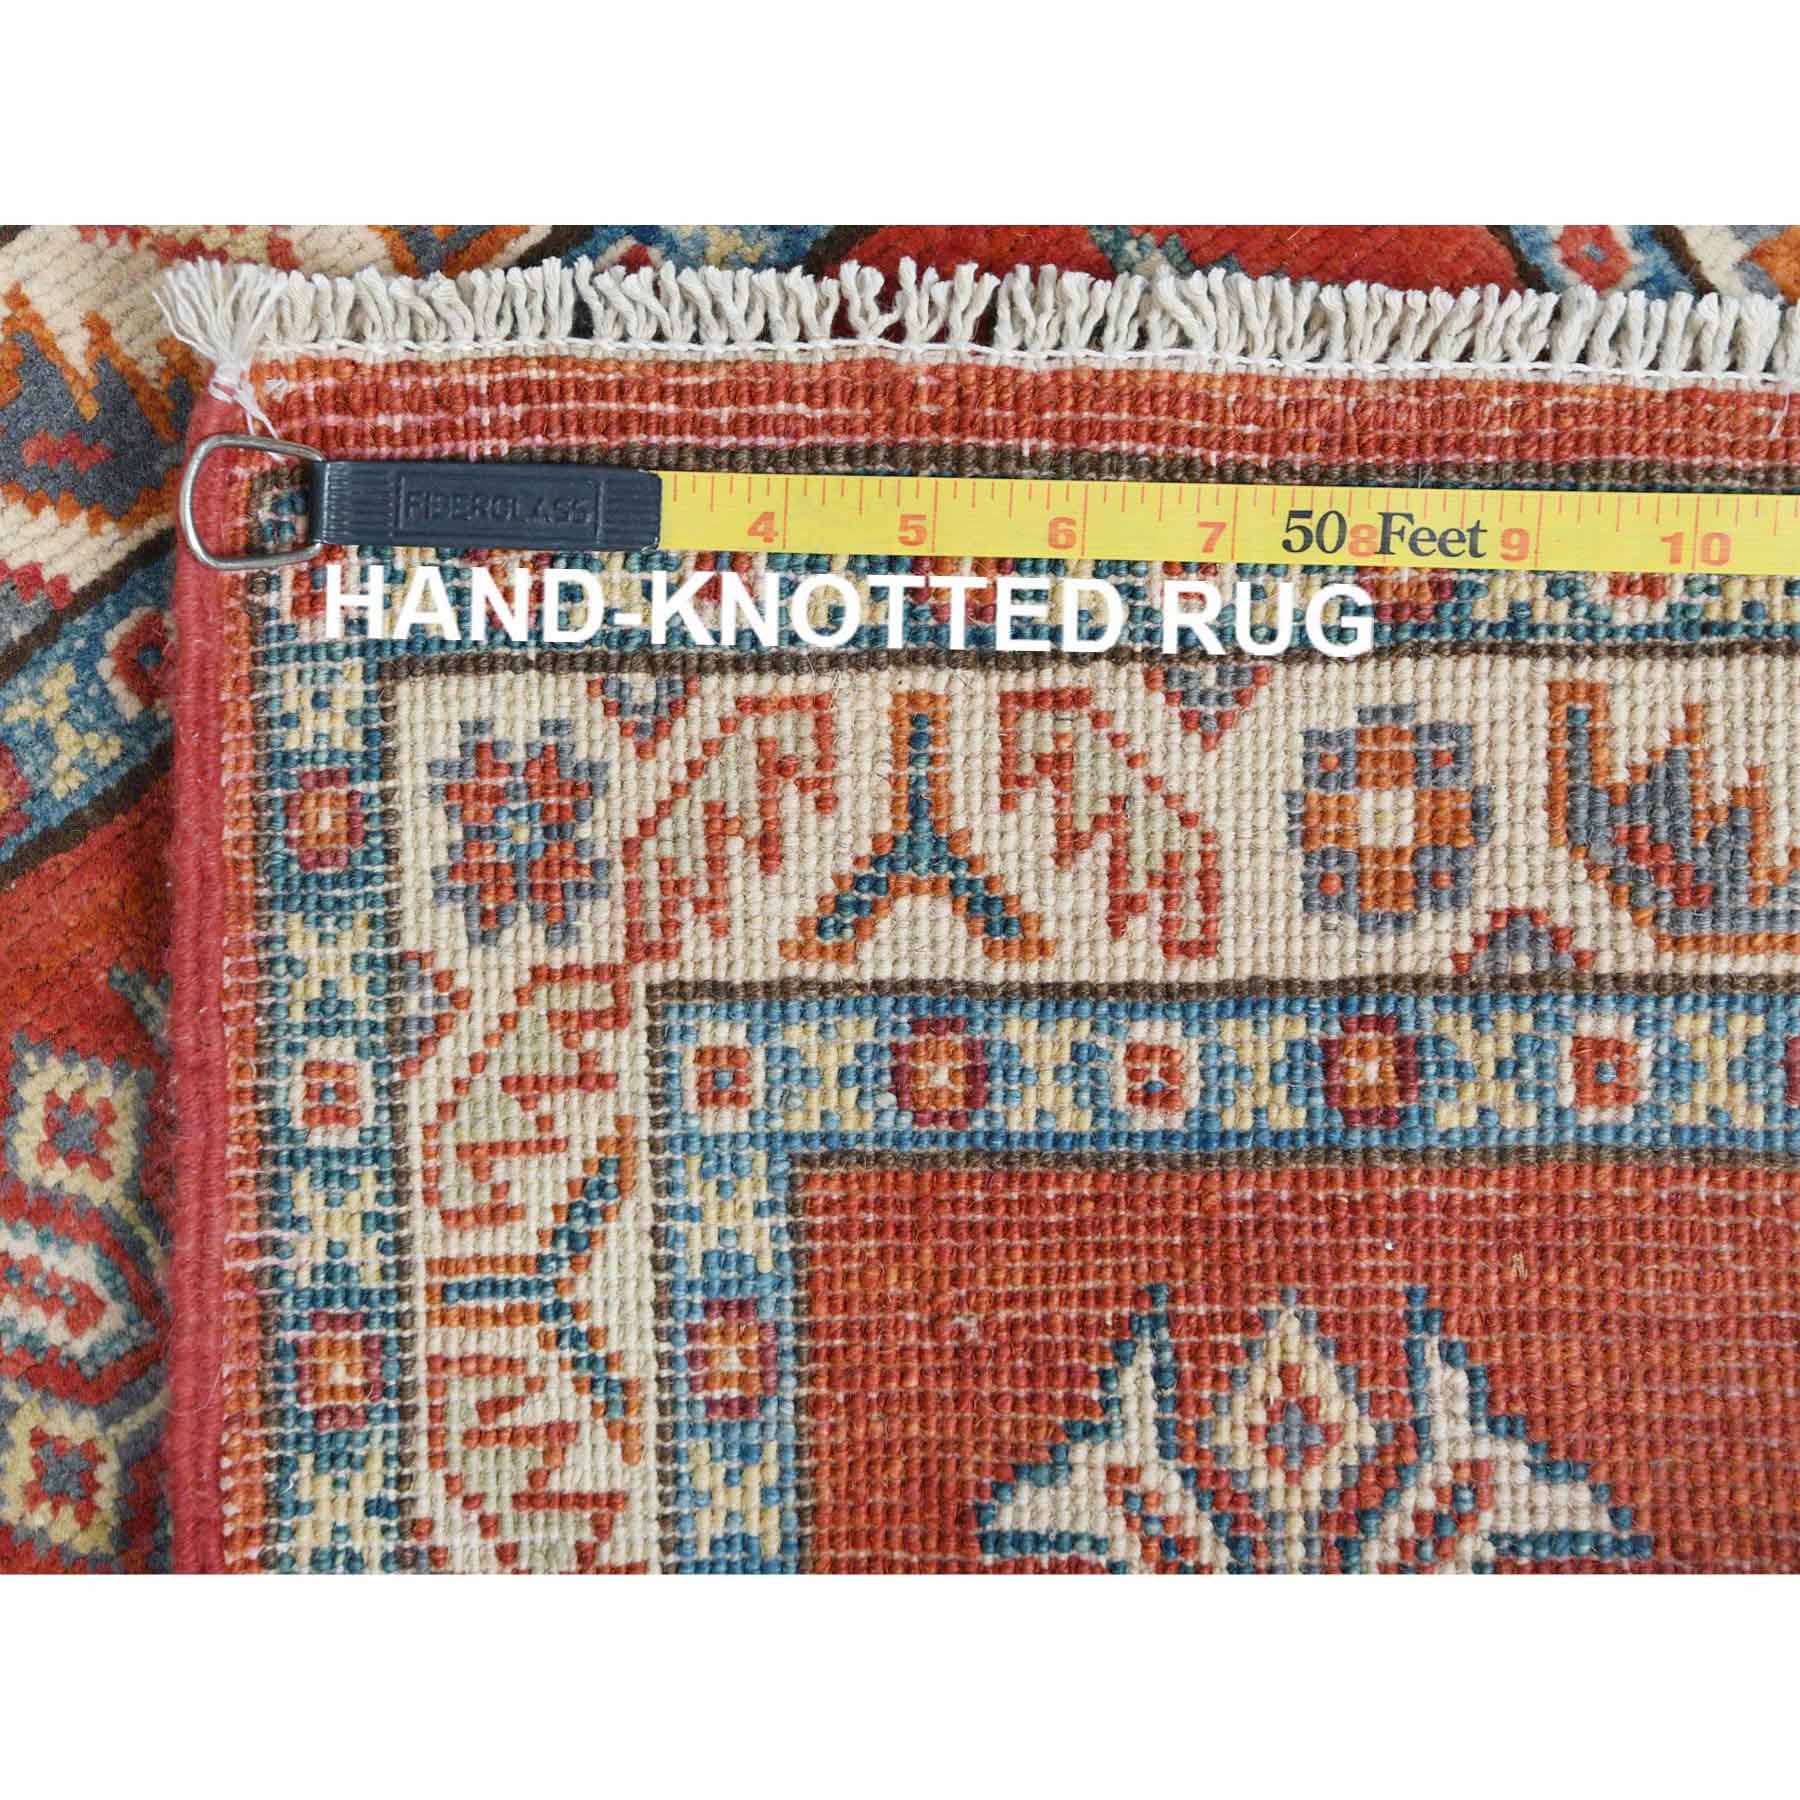 Tribal-Geometric-Hand-Knotted-Rug-408860